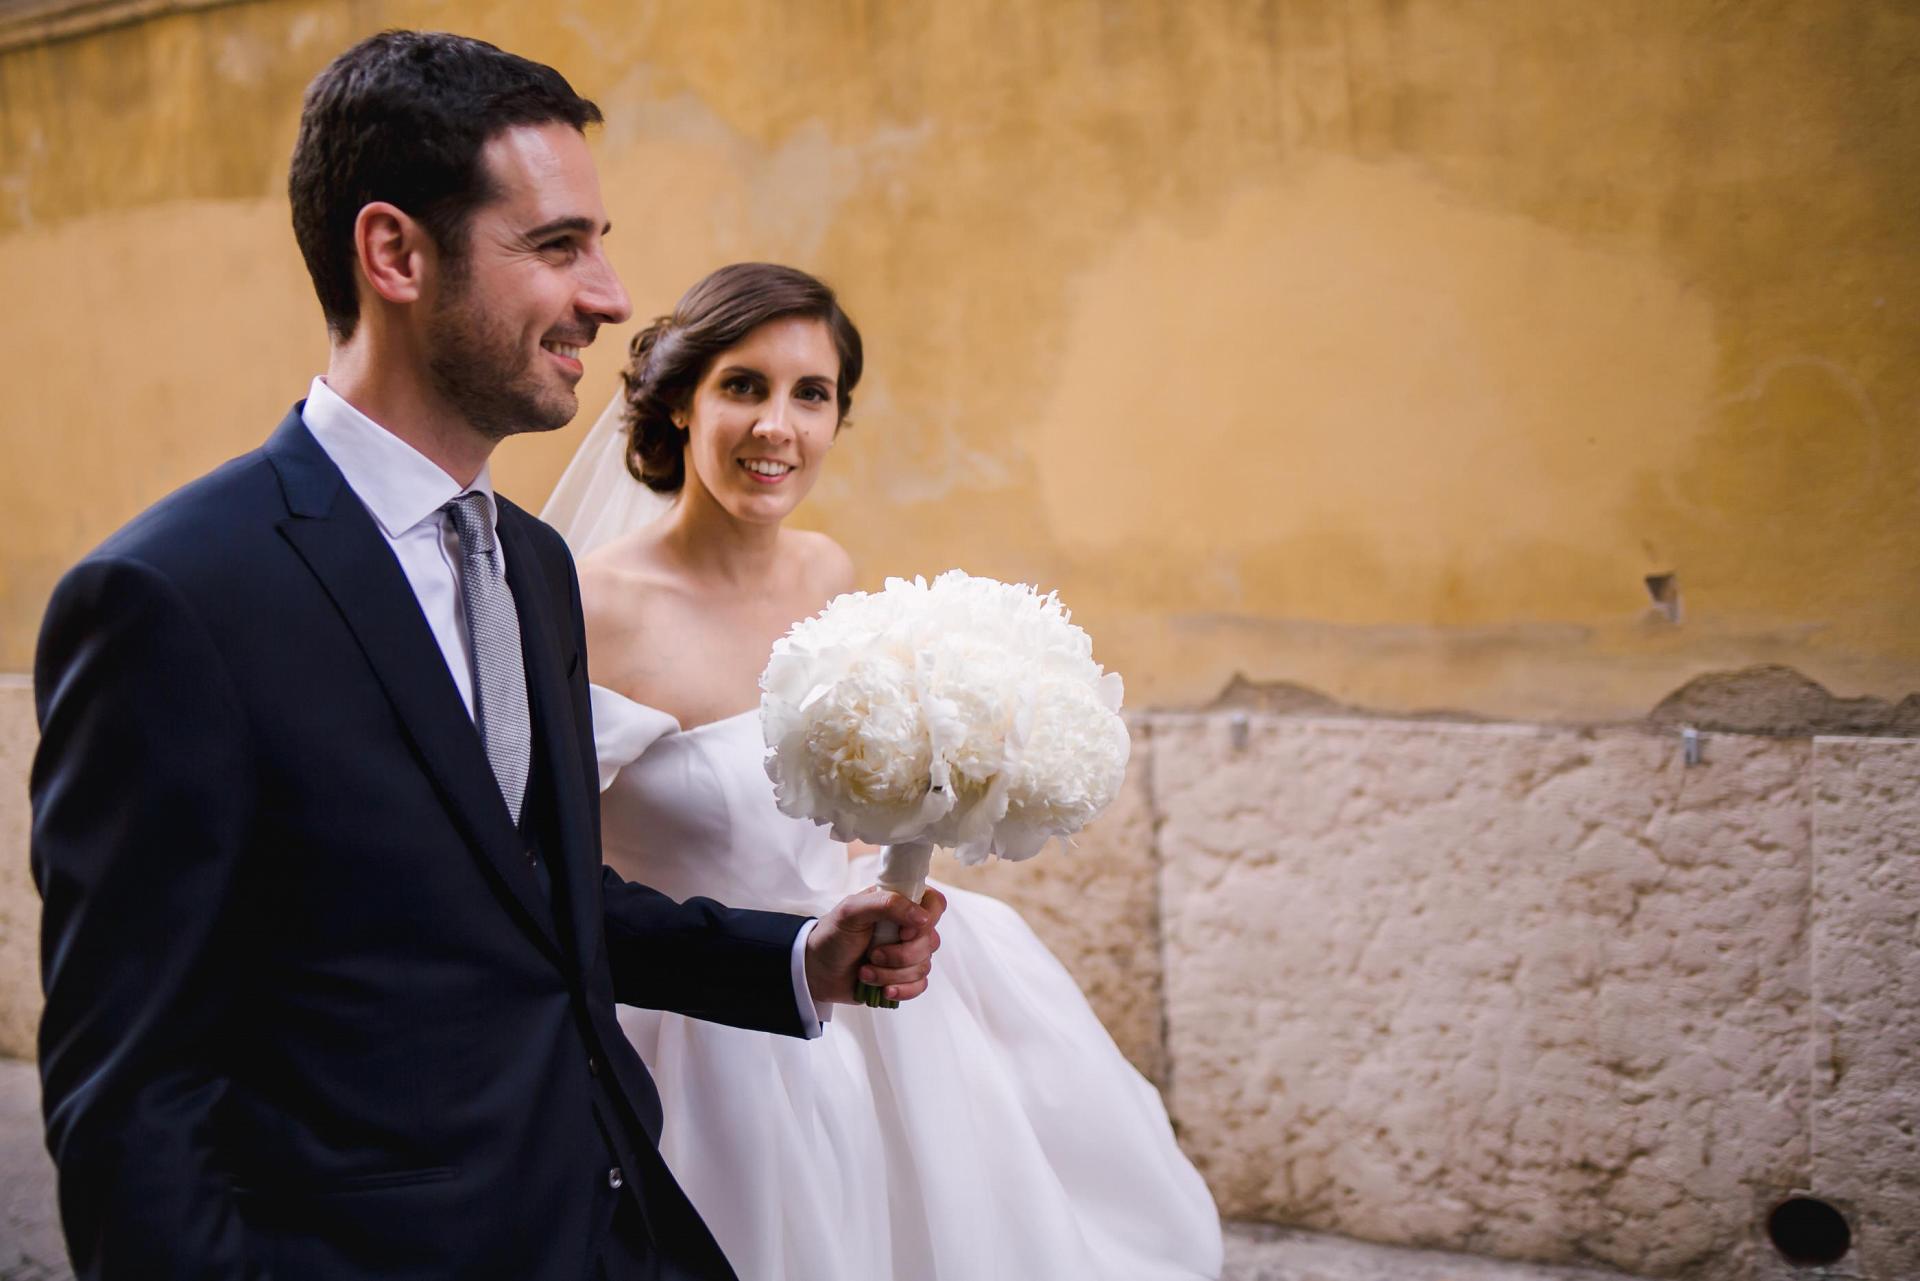 Lisa&Renato Matrimonio Verona Wedding Veneto MCE Stories Destination Photographer